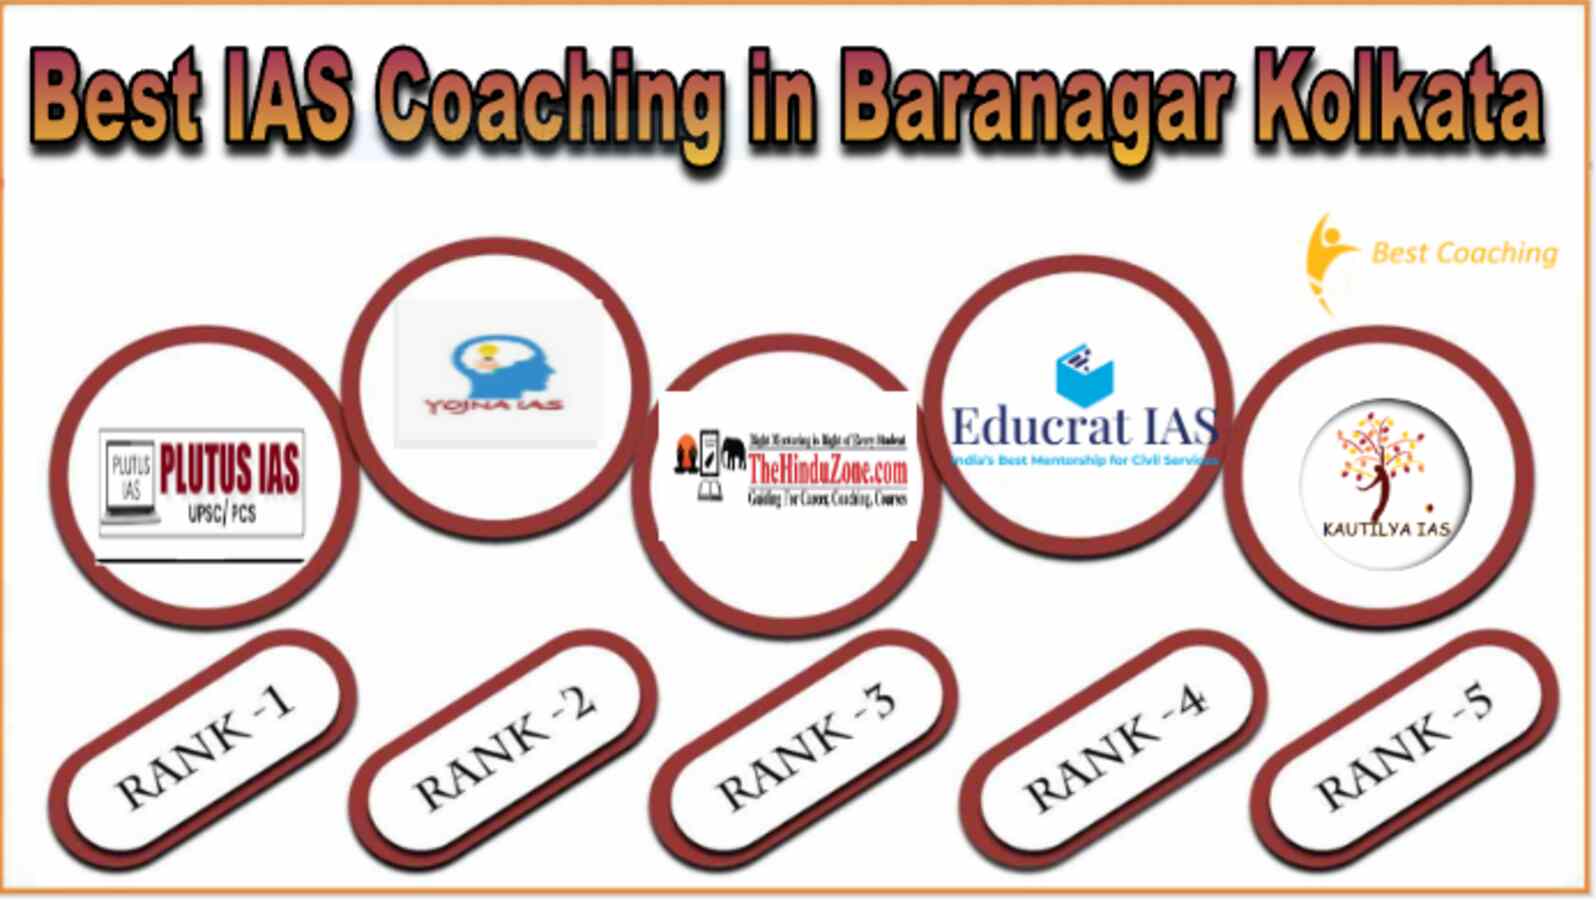 Best IAS Coaching in Baranagar Kolkata